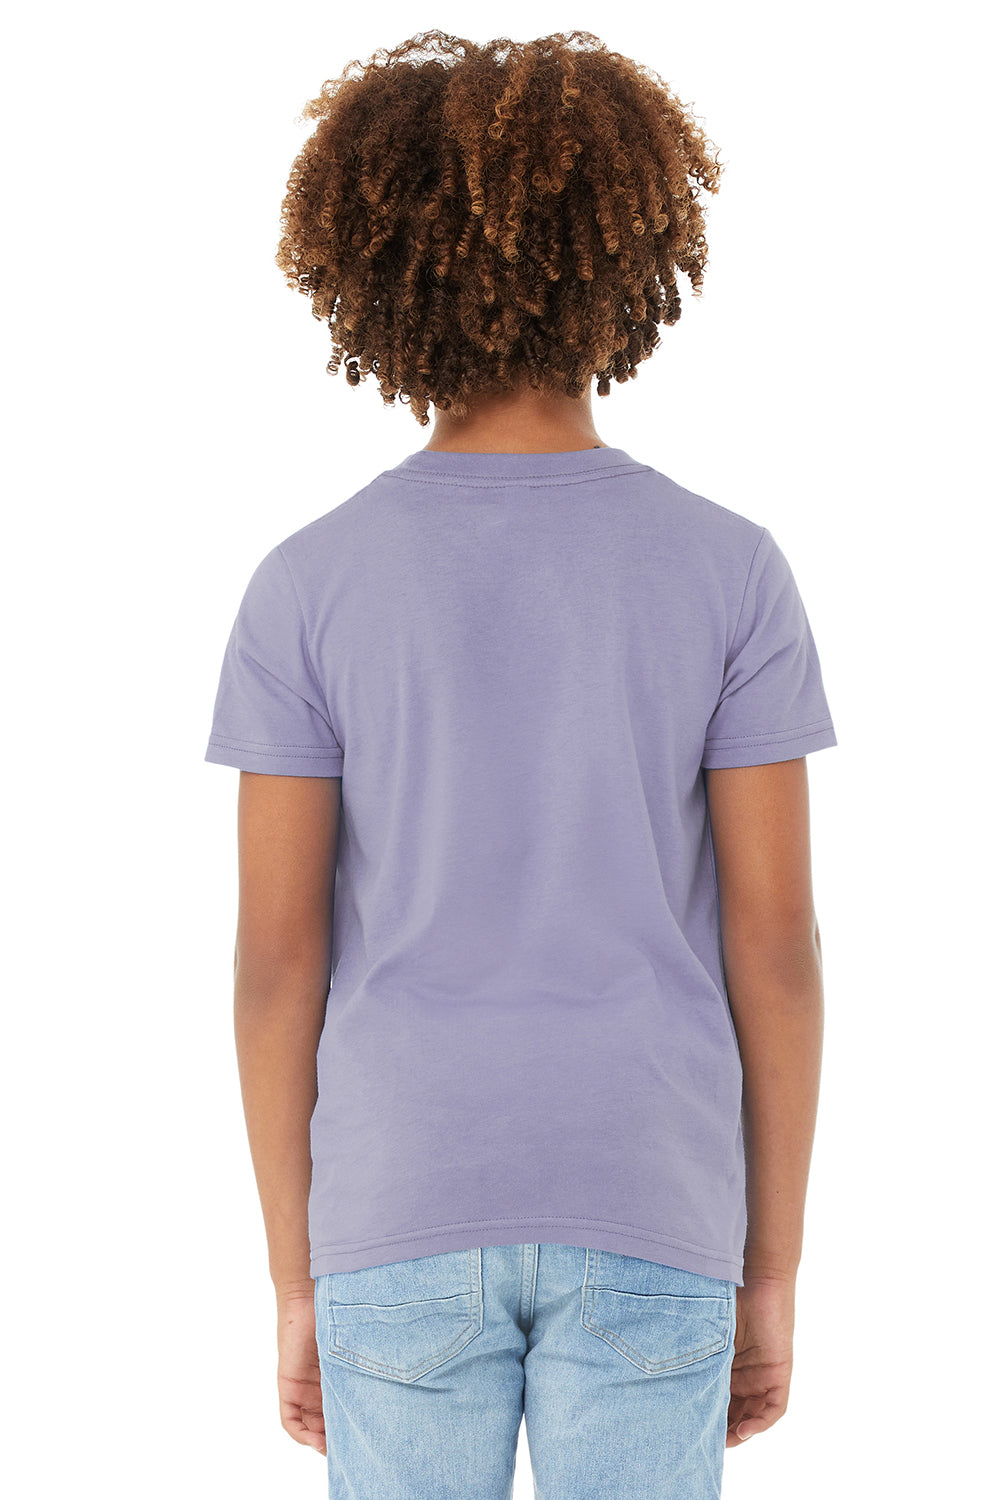 Bella + Canvas 3001Y Youth Jersey Short Sleeve Crewneck T-Shirt Dark Lavender Purple Model Back